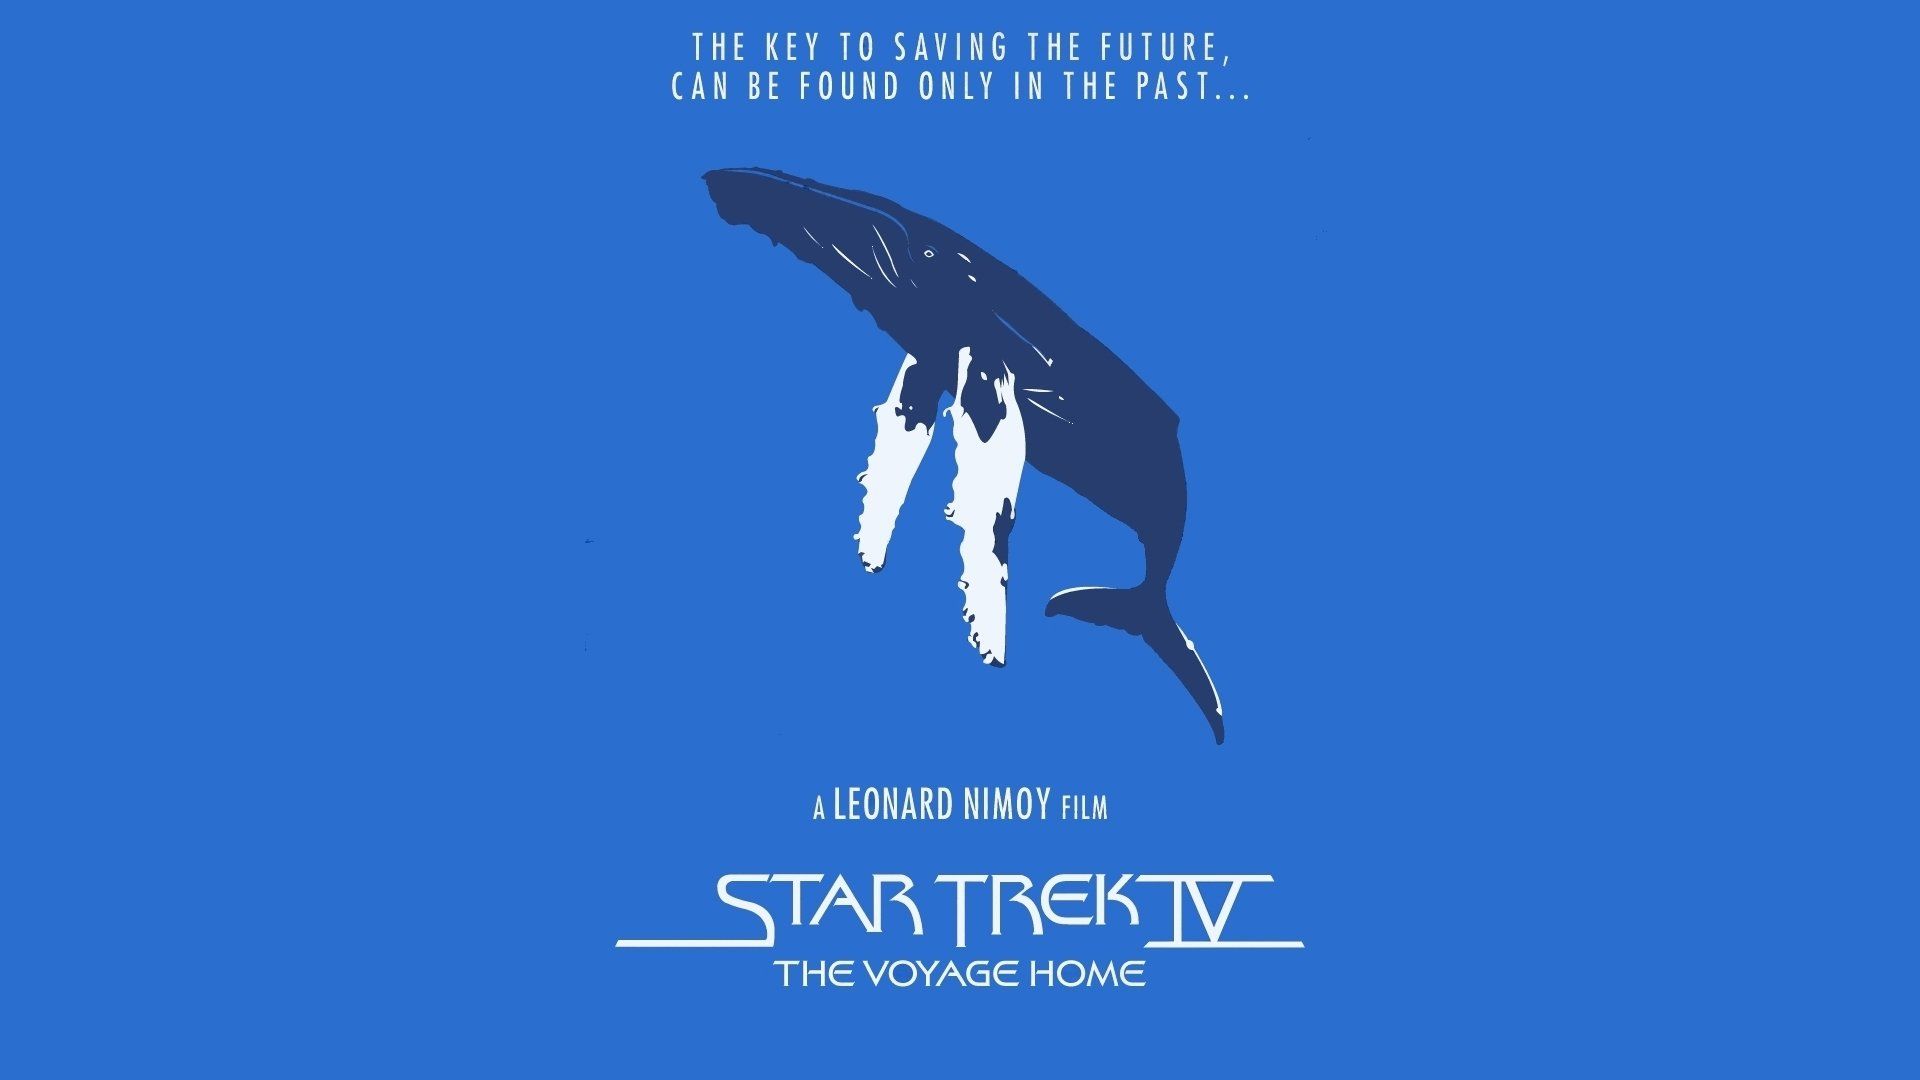 Movie Star Trek IV: The Voyage Home Wallpaper. Star trek, Trek, Voyage